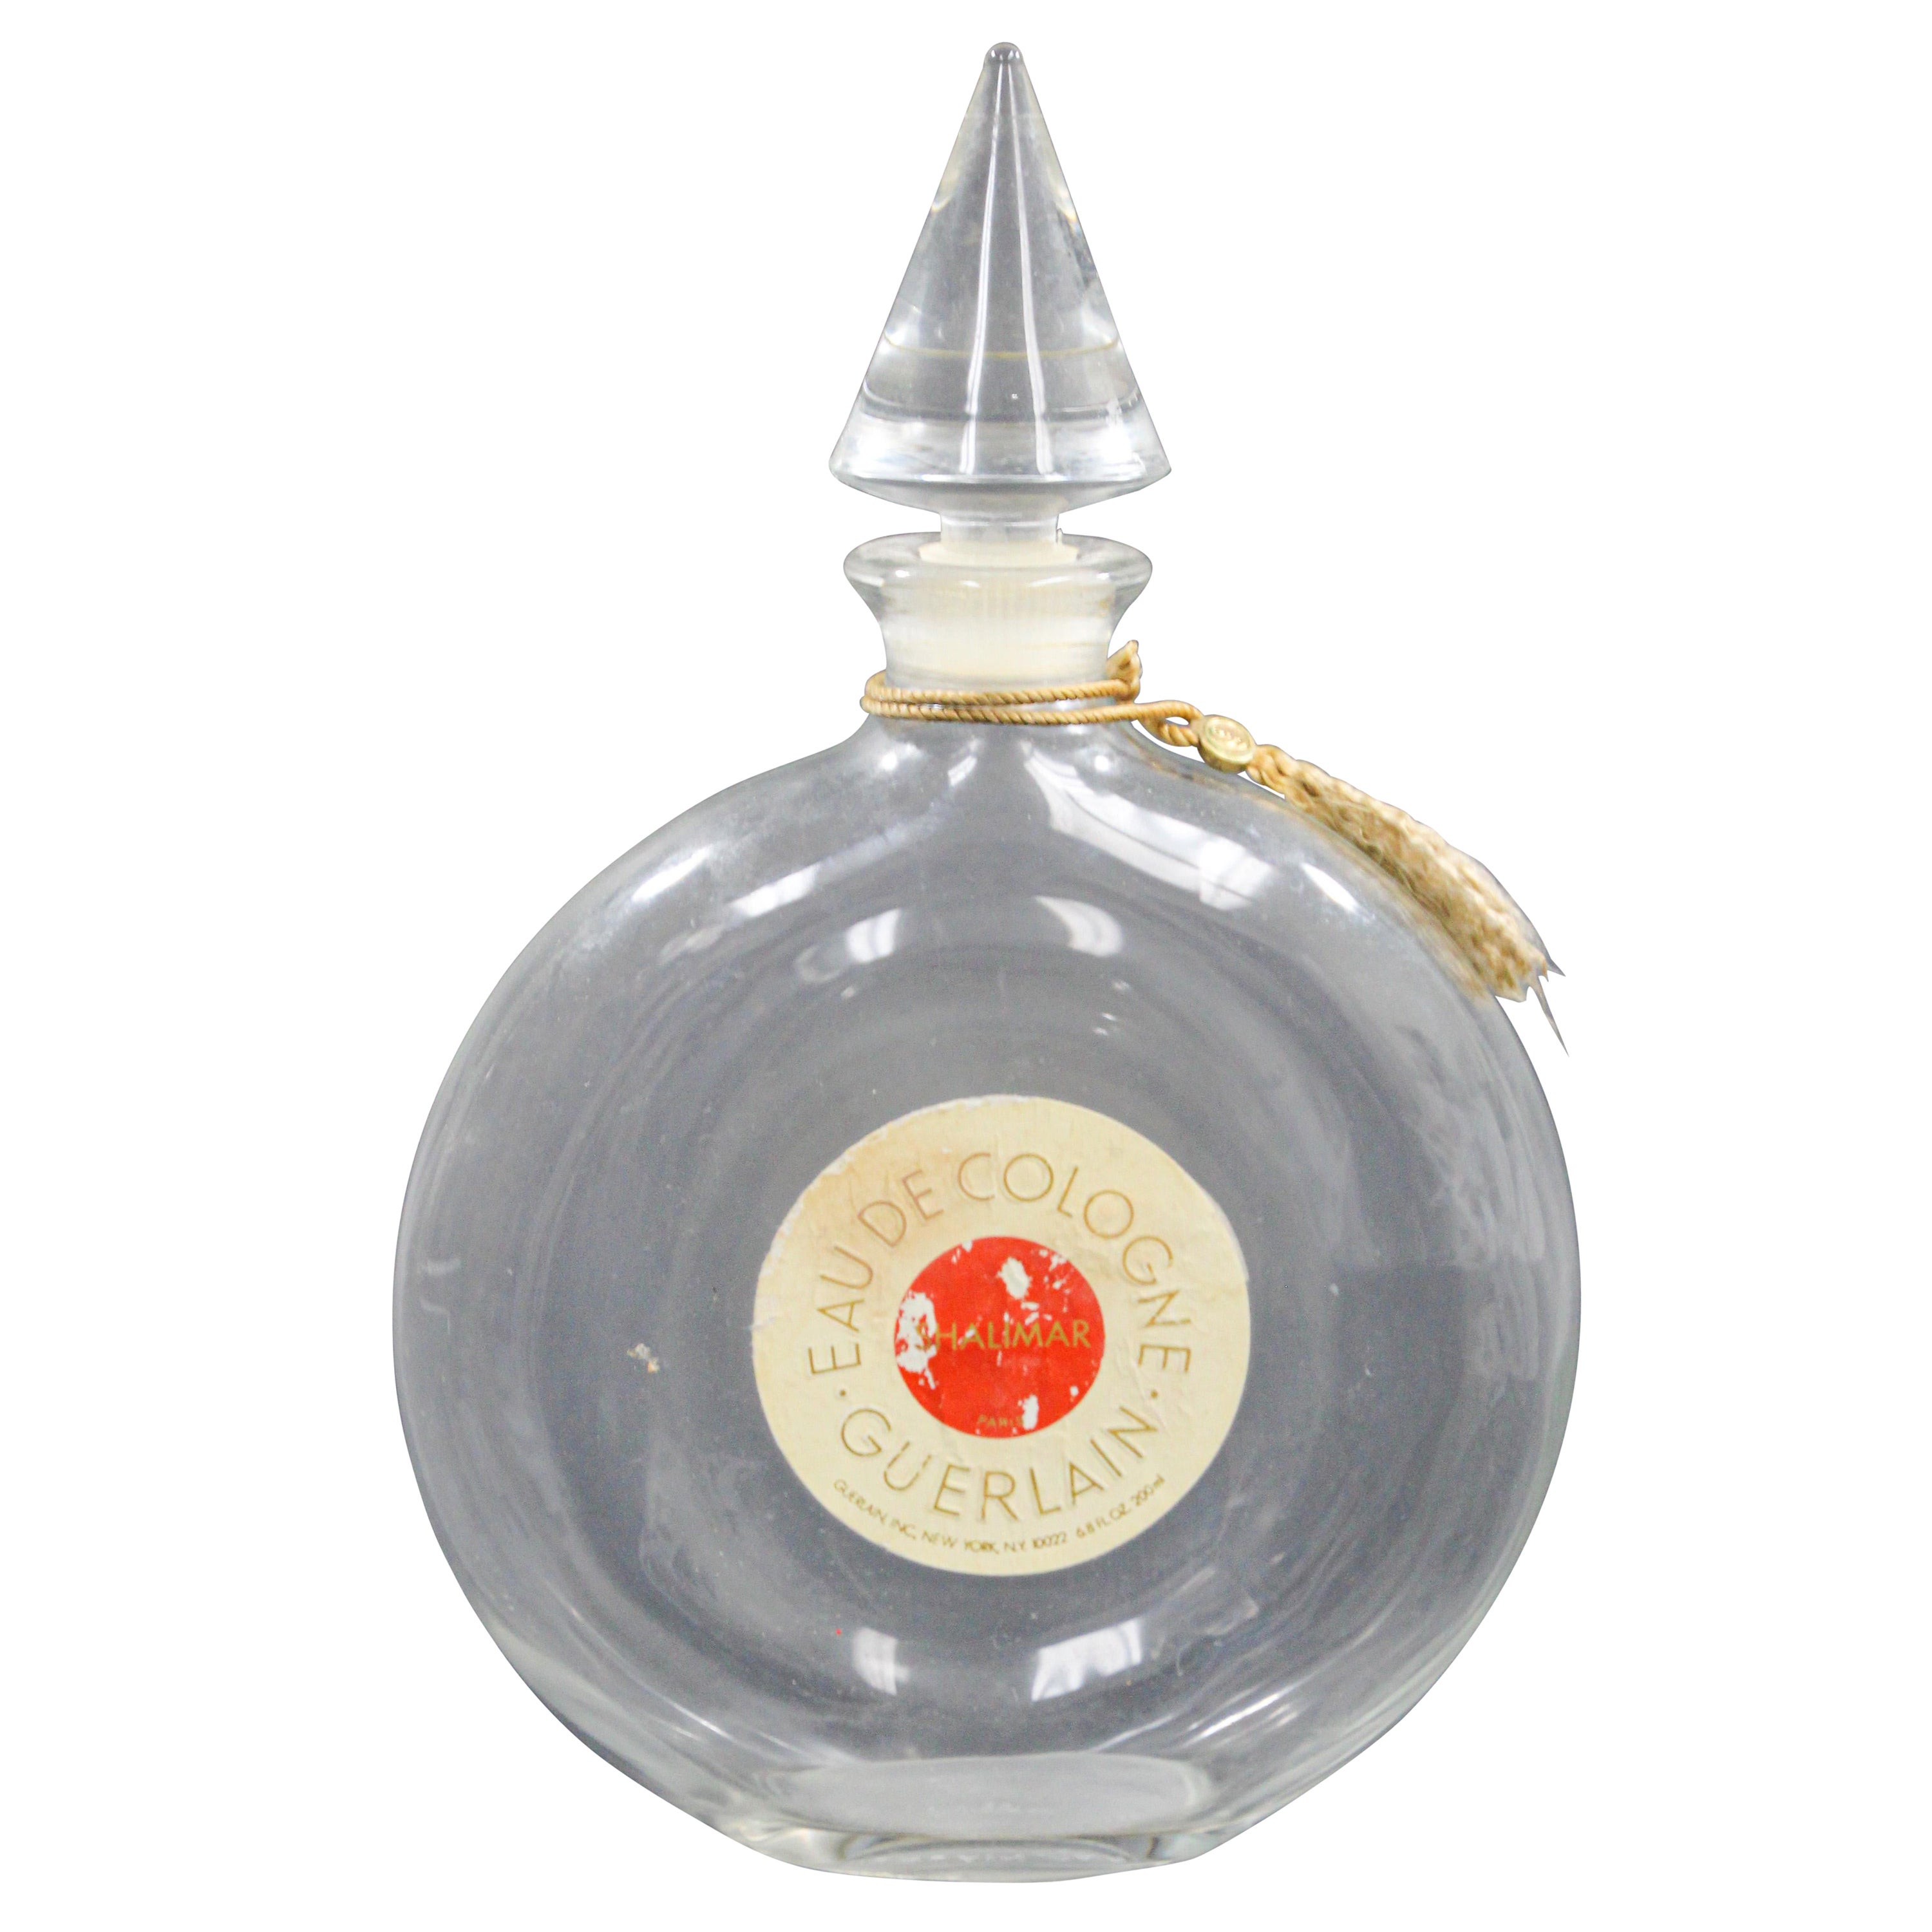 Vintage Guerlain Shalimar Cologne Perfume Bottle Collectible For Sale